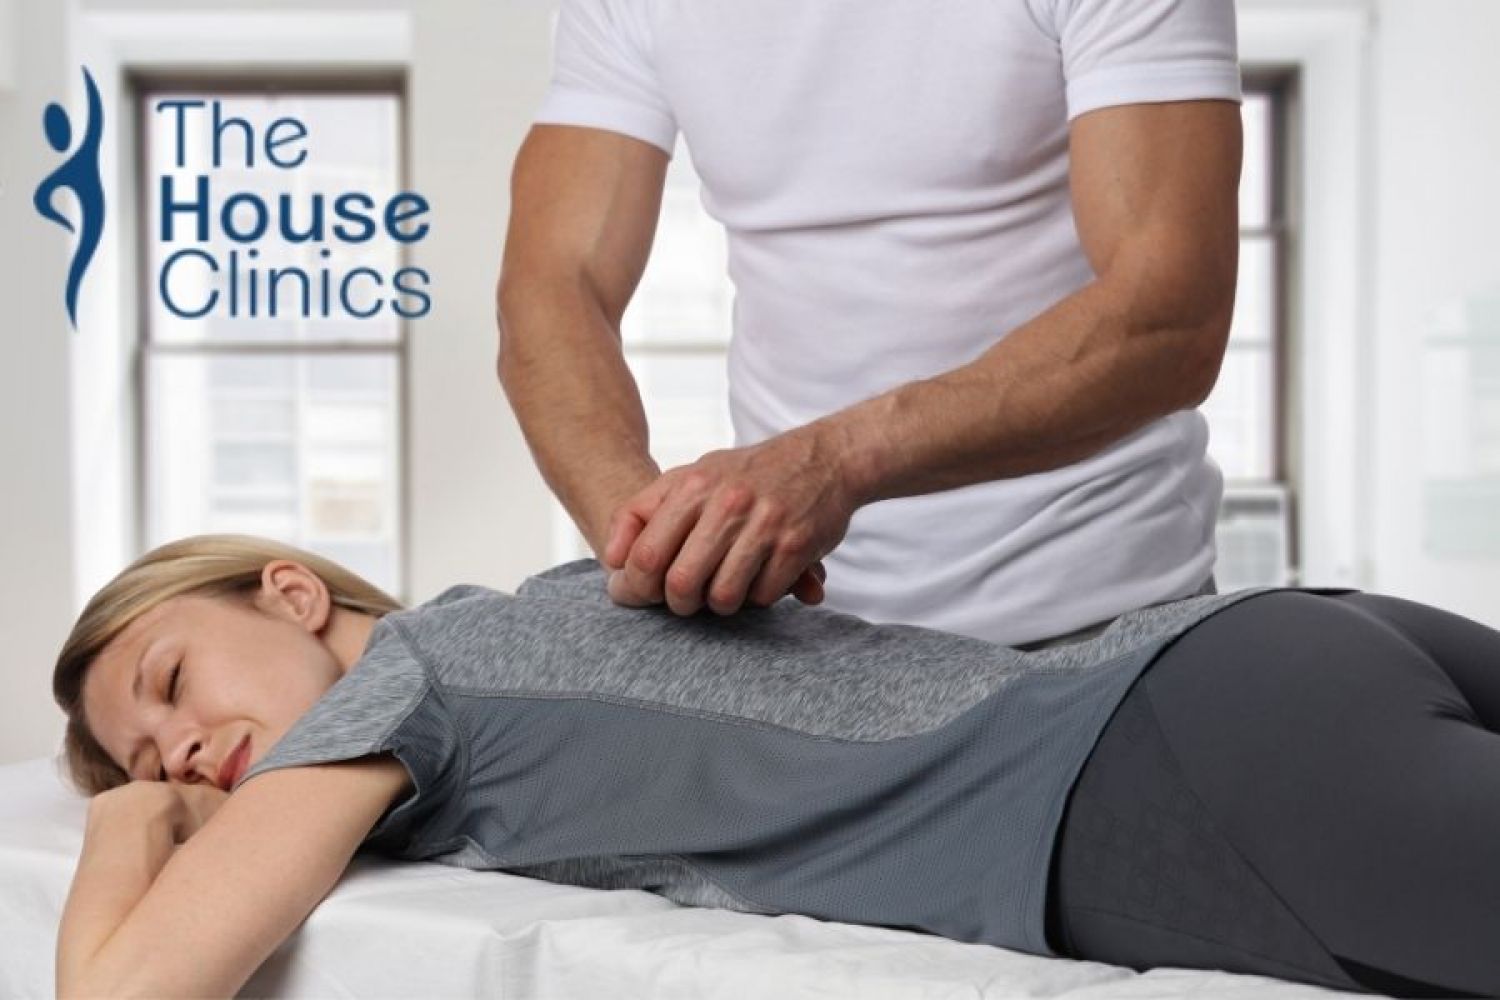 chiropractor reviews of mattresses